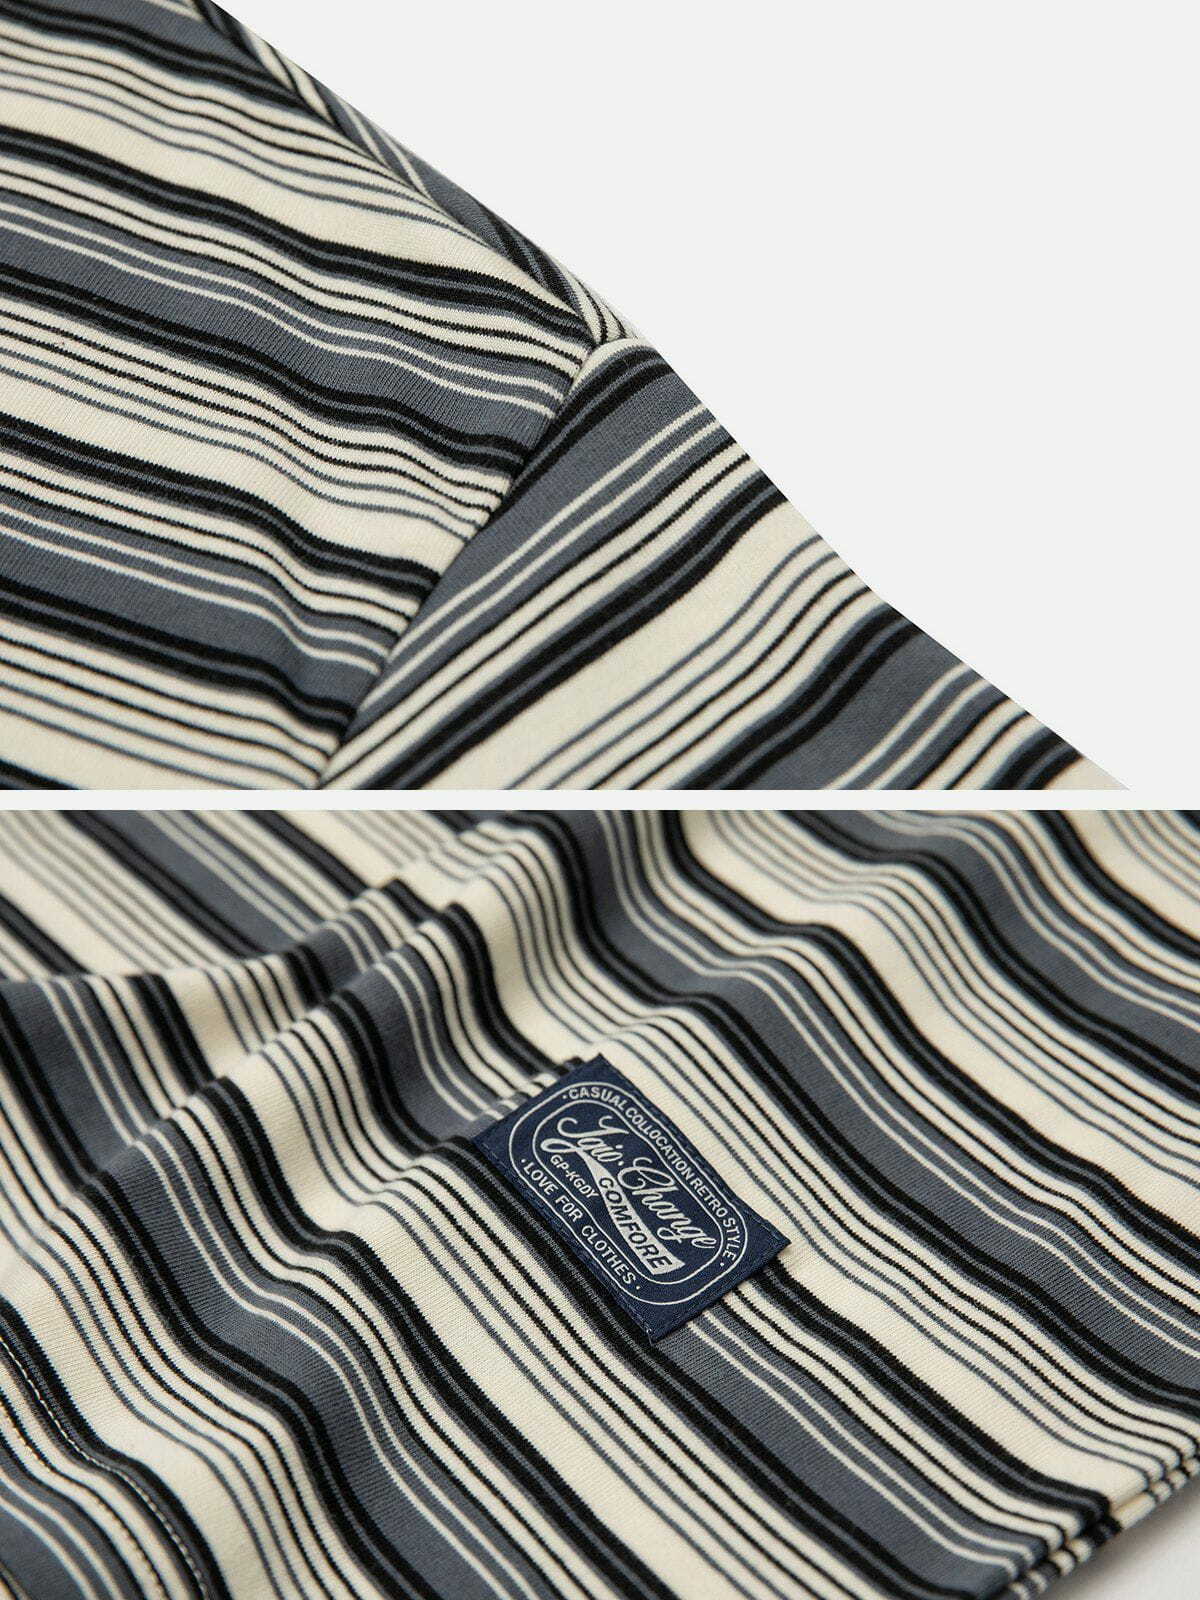 color clash stripes tee vibrant retro streetwear statement 1076